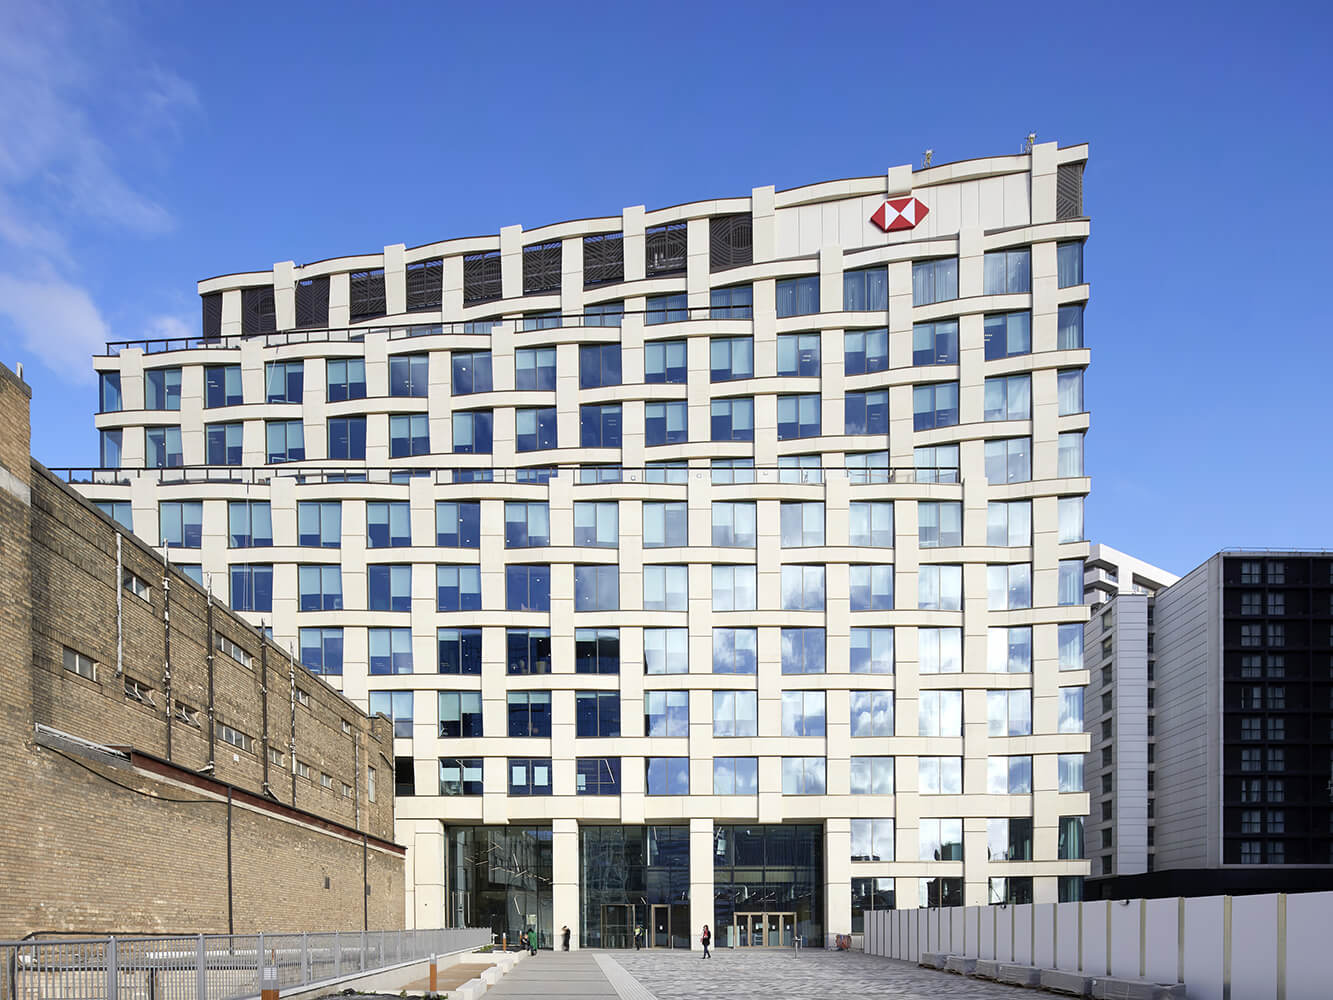 New HSBC European Headquarters – Birmingham, England